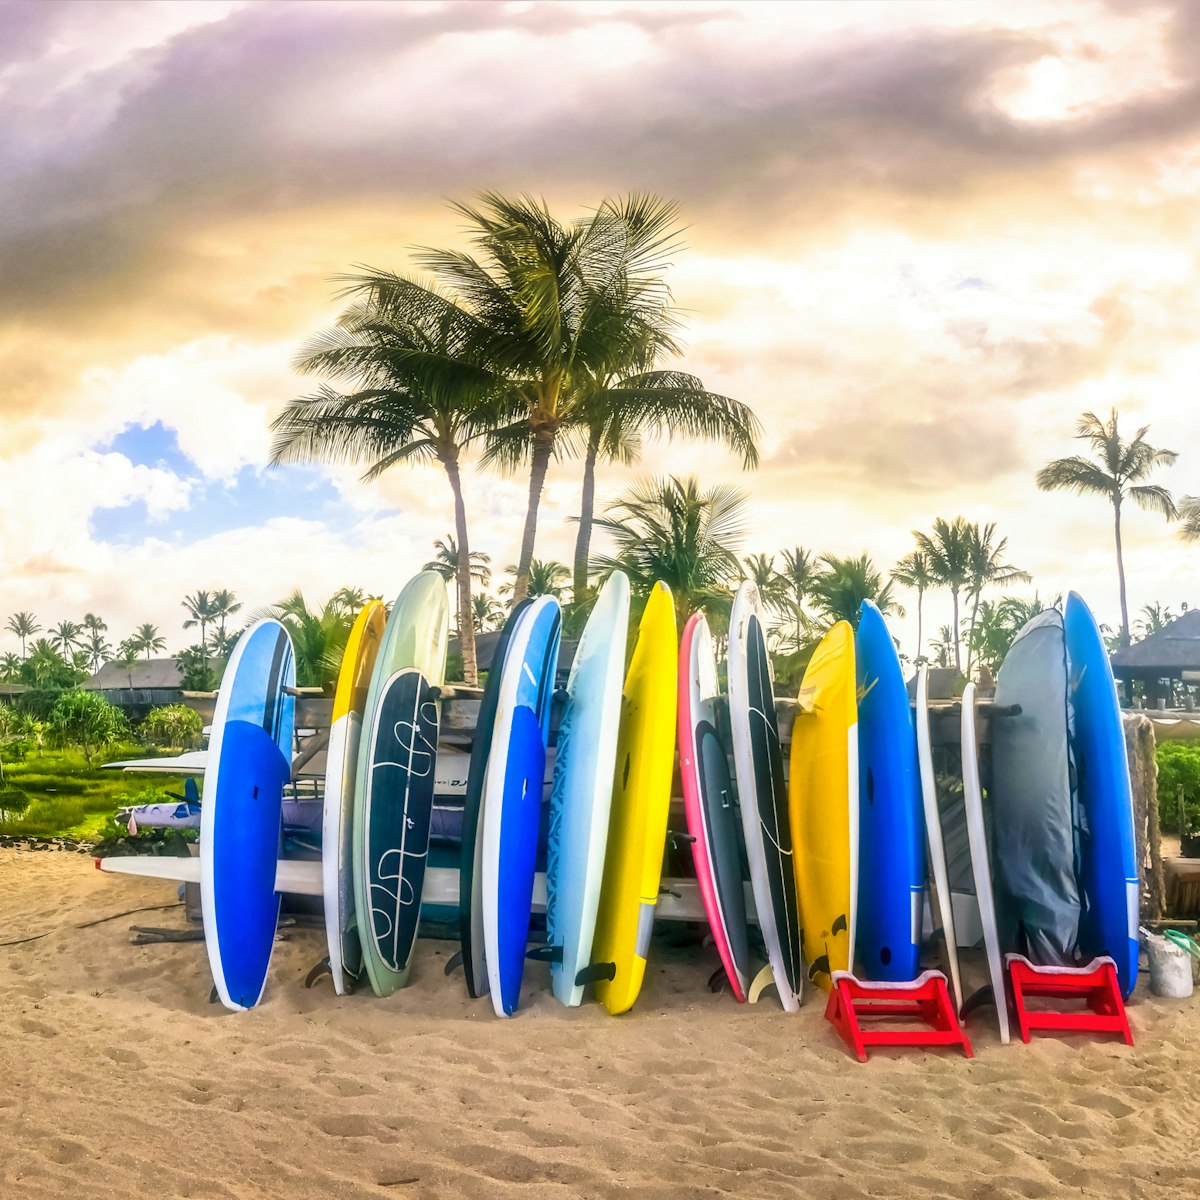 Surfboards lined up at a outdoor recreation beach spot in the beautiful tropics. Kukio Beach, Big Island, Hawaii, USA. Kikaua Point Park.
896972932
kukio beach, kikaua point, waiakuhi, kahuwai bay